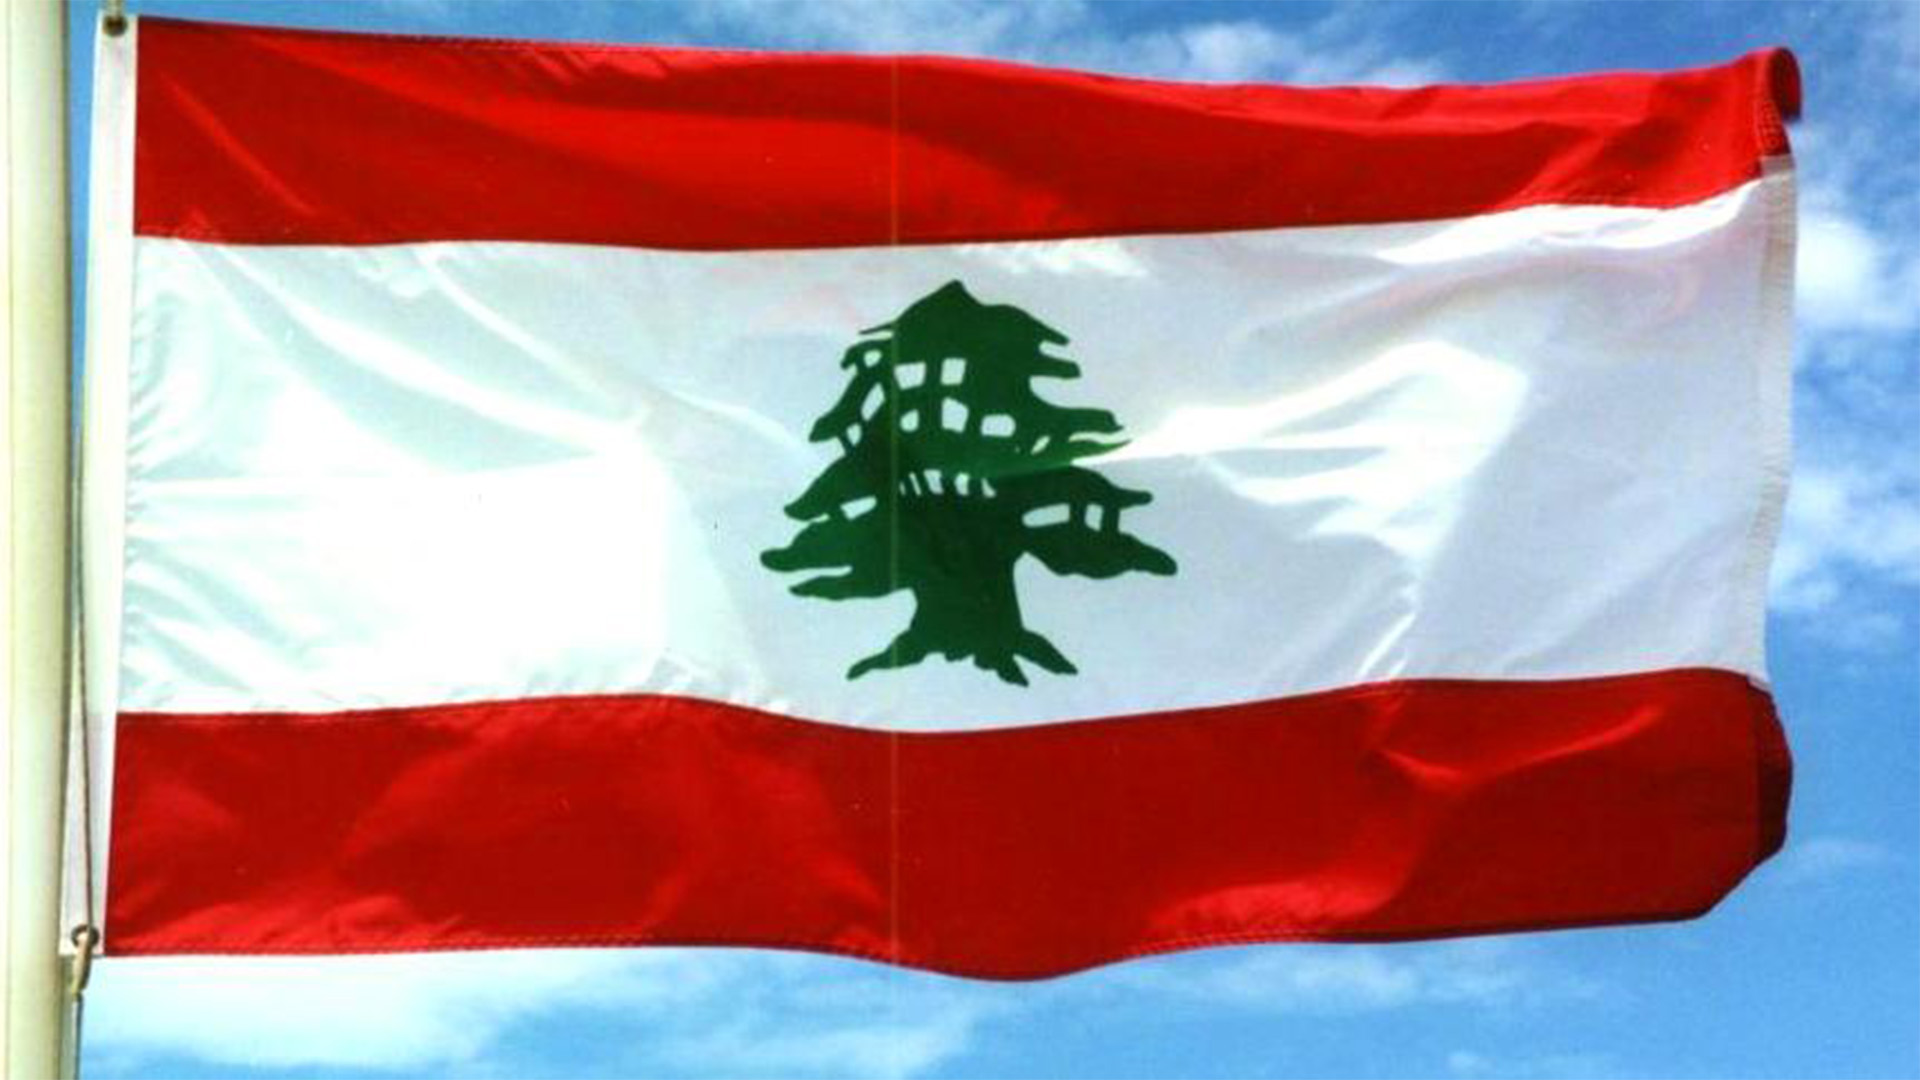 waving flag image hd of lebanon